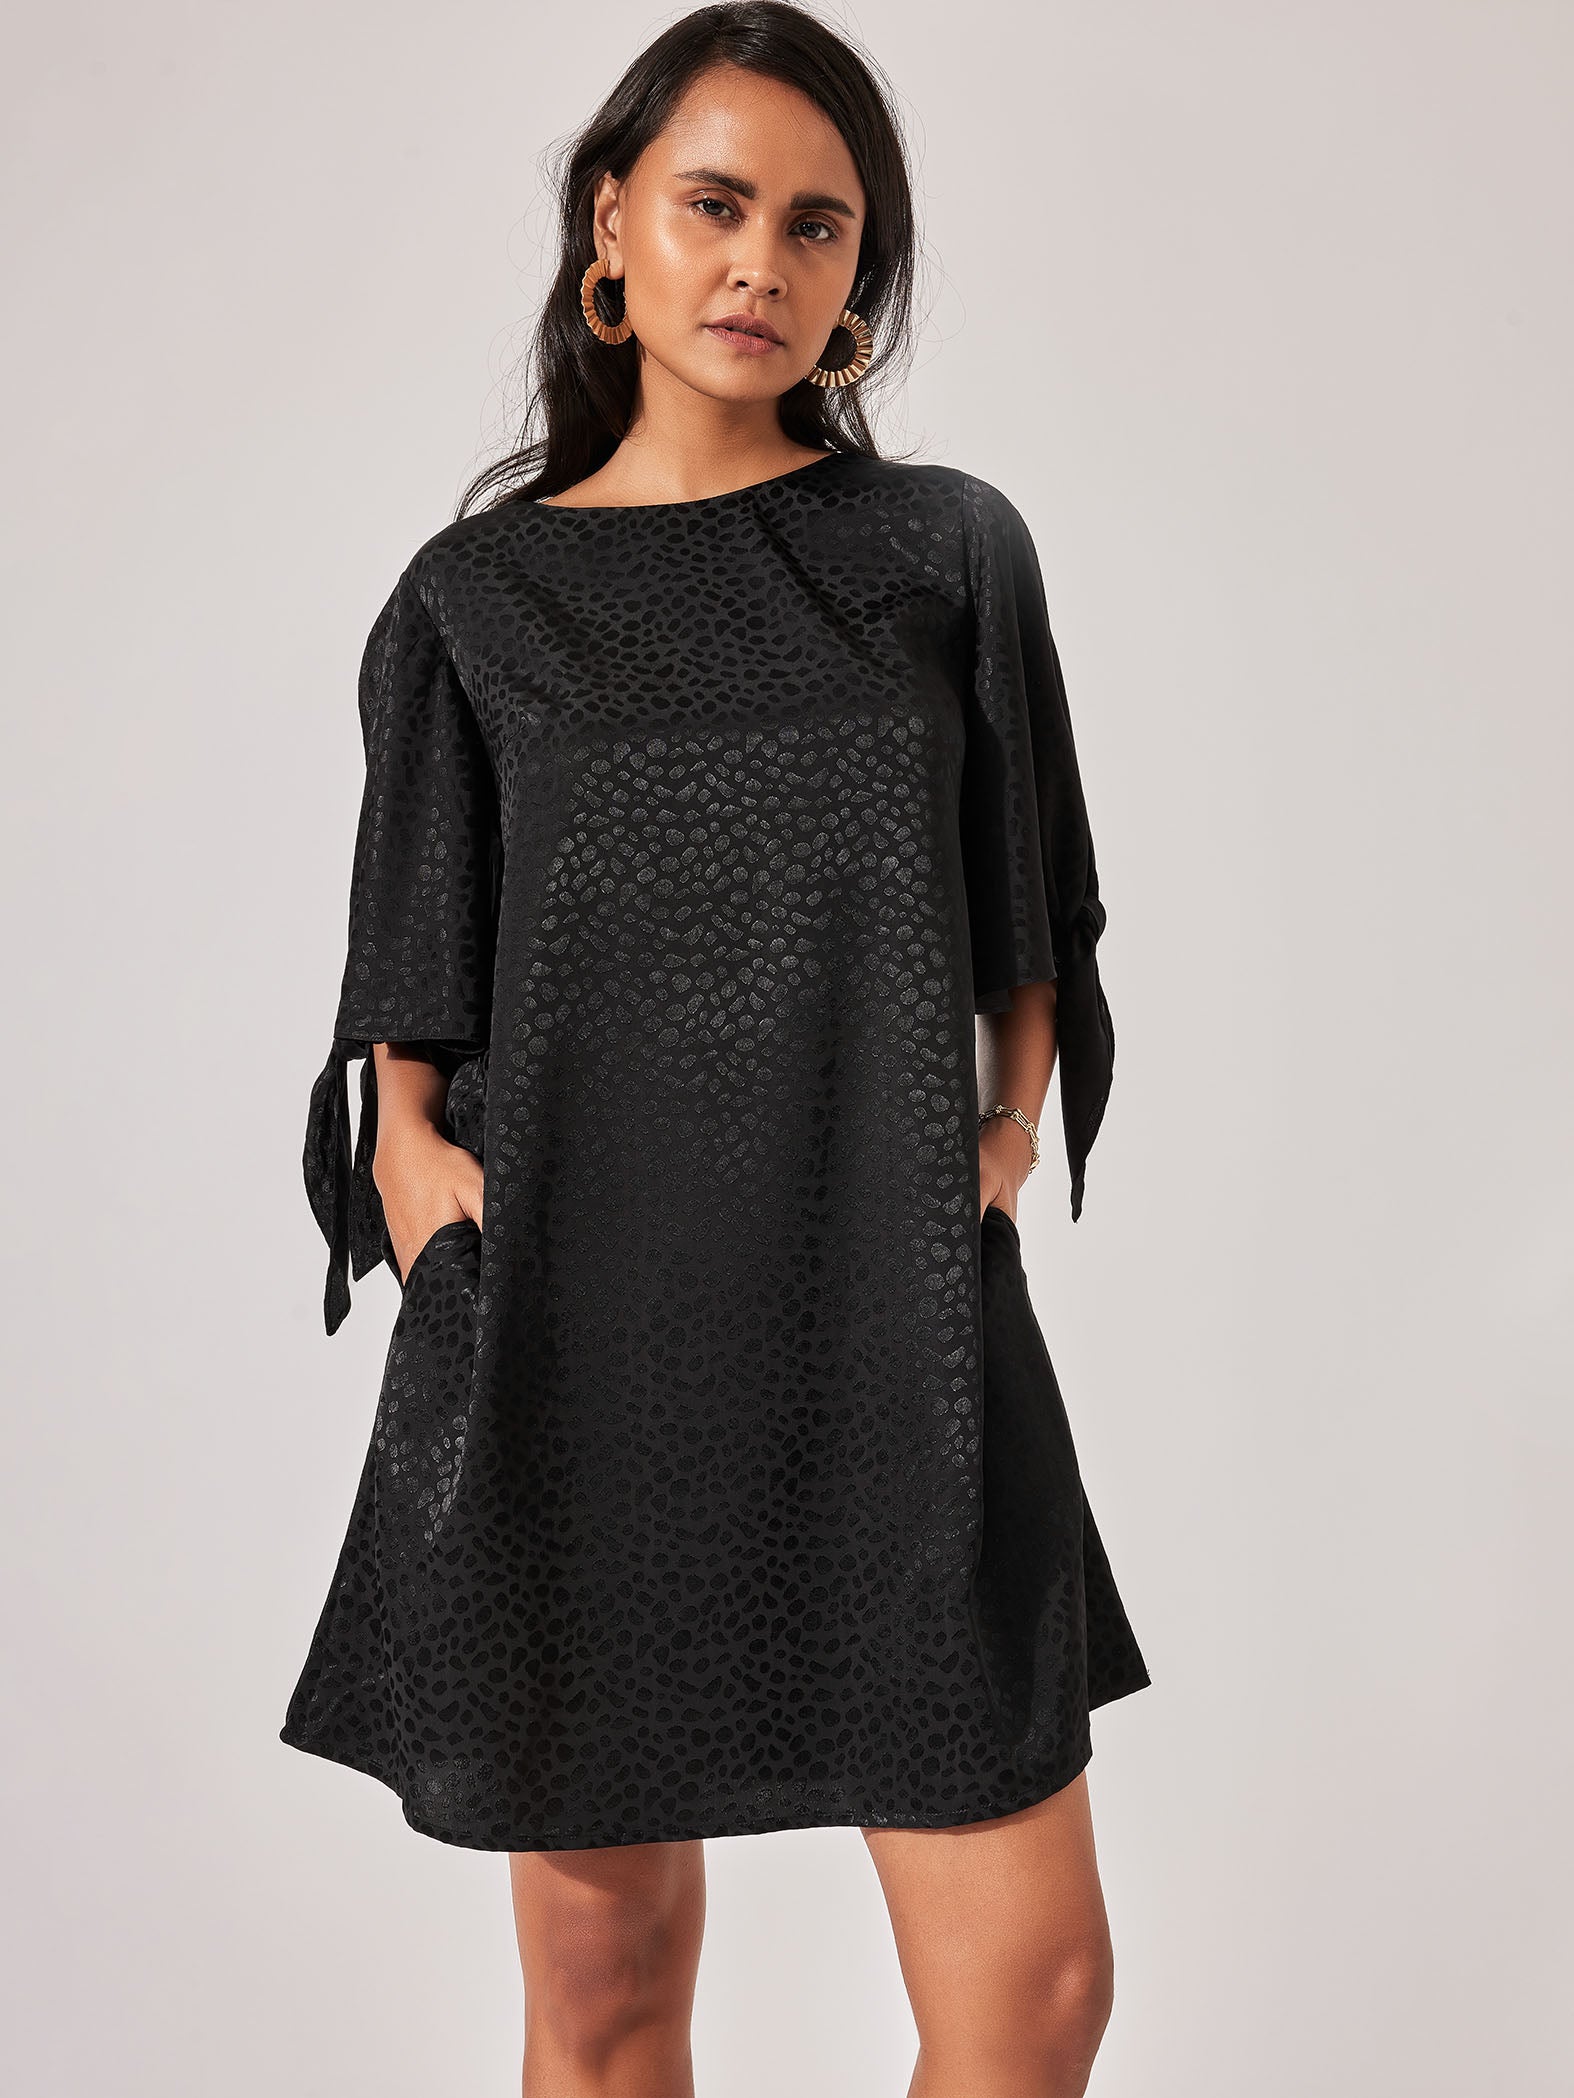 Black Satin Textured Dress